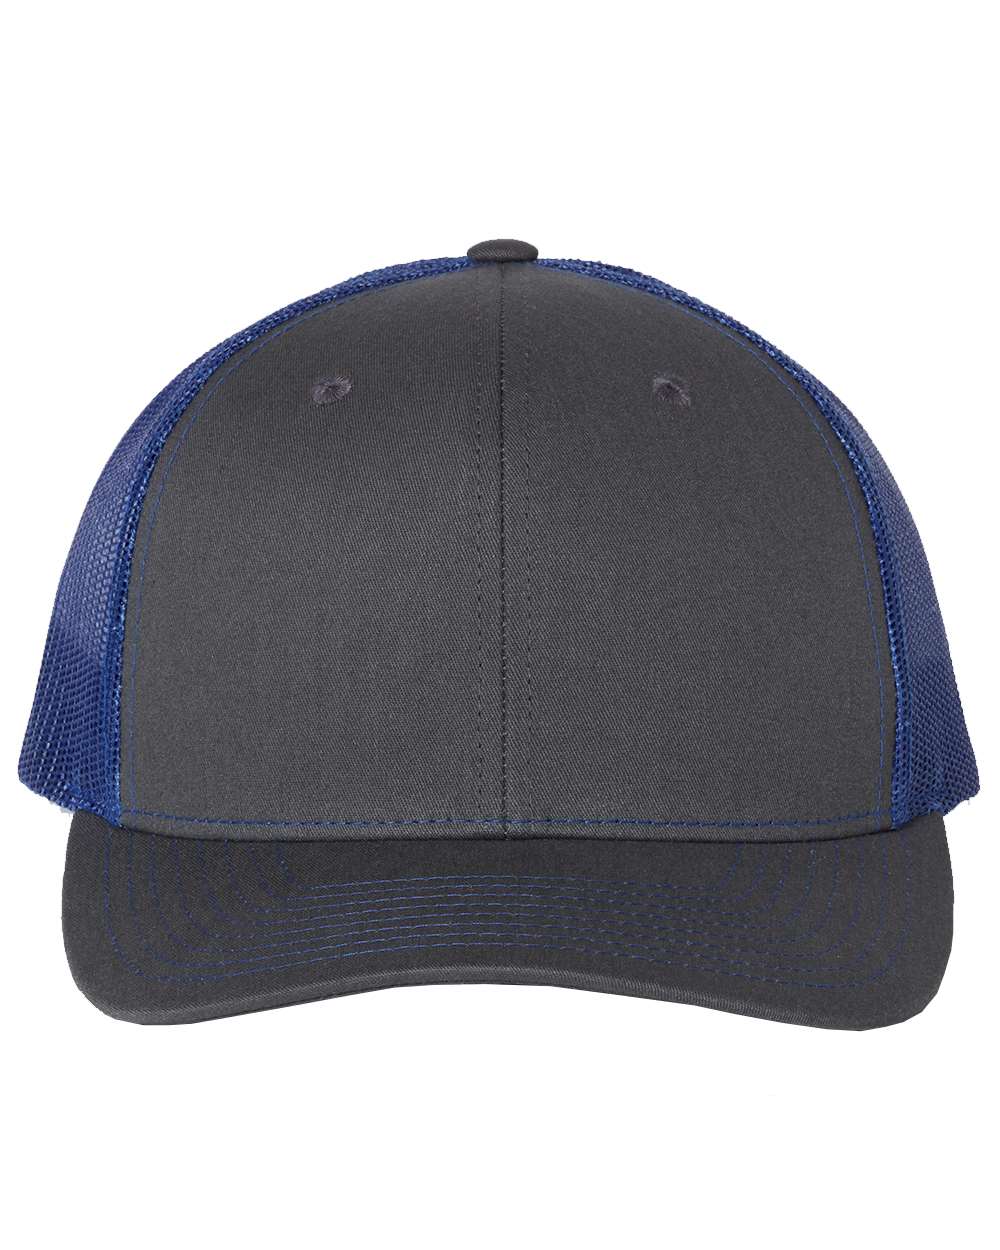 Richardson Snapback Trucker Hat (112) in Charcoal/Royal